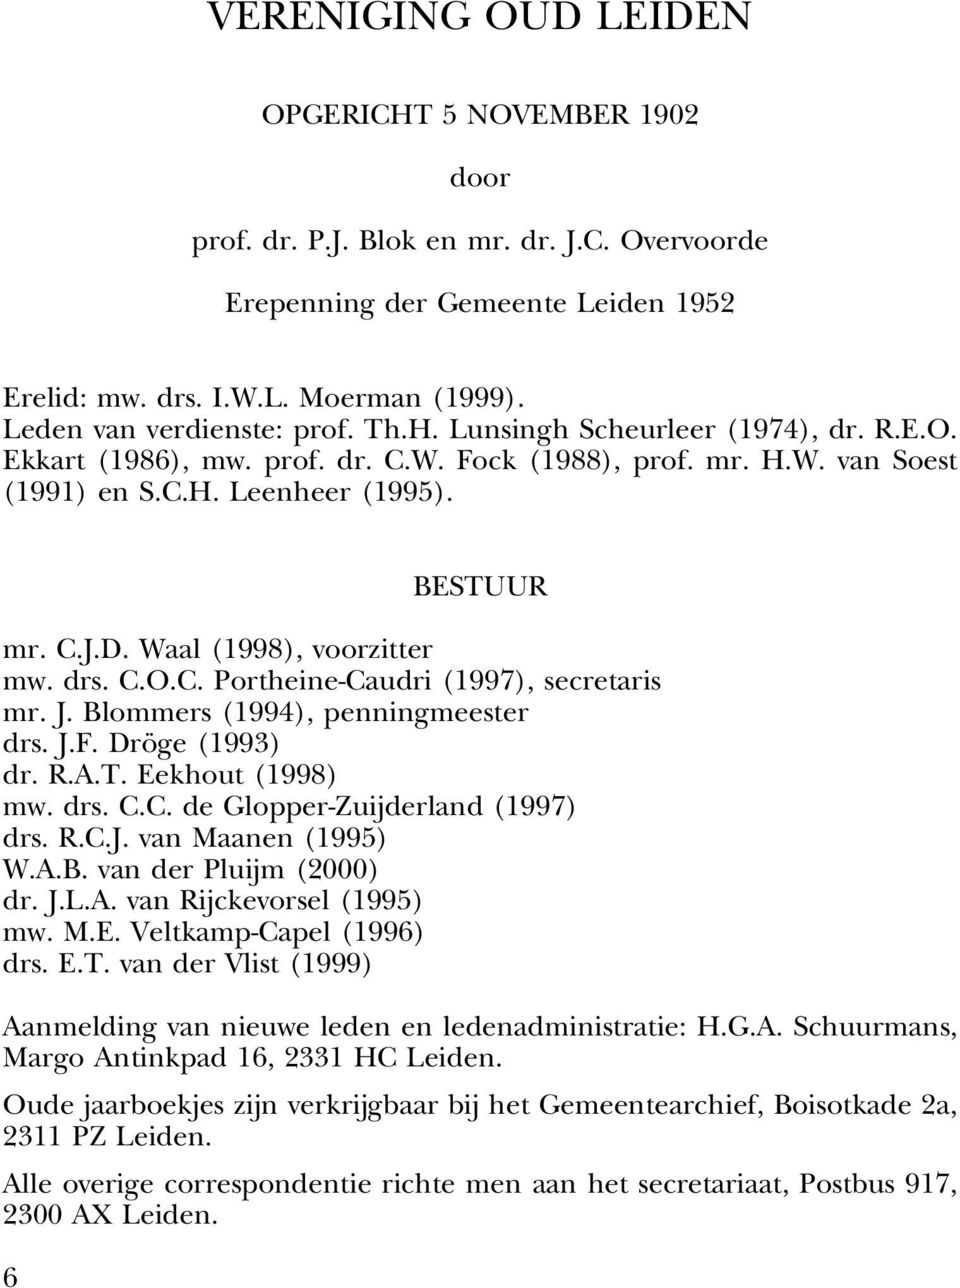 6 BESTUUR mr. C.J.D. Waal (1998), voorzitter mw. drs. C.O.C. Portheine-Caudri (1997), secretaris mr. J. Blommers (1994), penningmeester drs. J.F. Dröge (1993) dr. R.A.T. Eekhout (1998) mw. drs. C.C. de Glopper-Zuijderland (1997) drs.